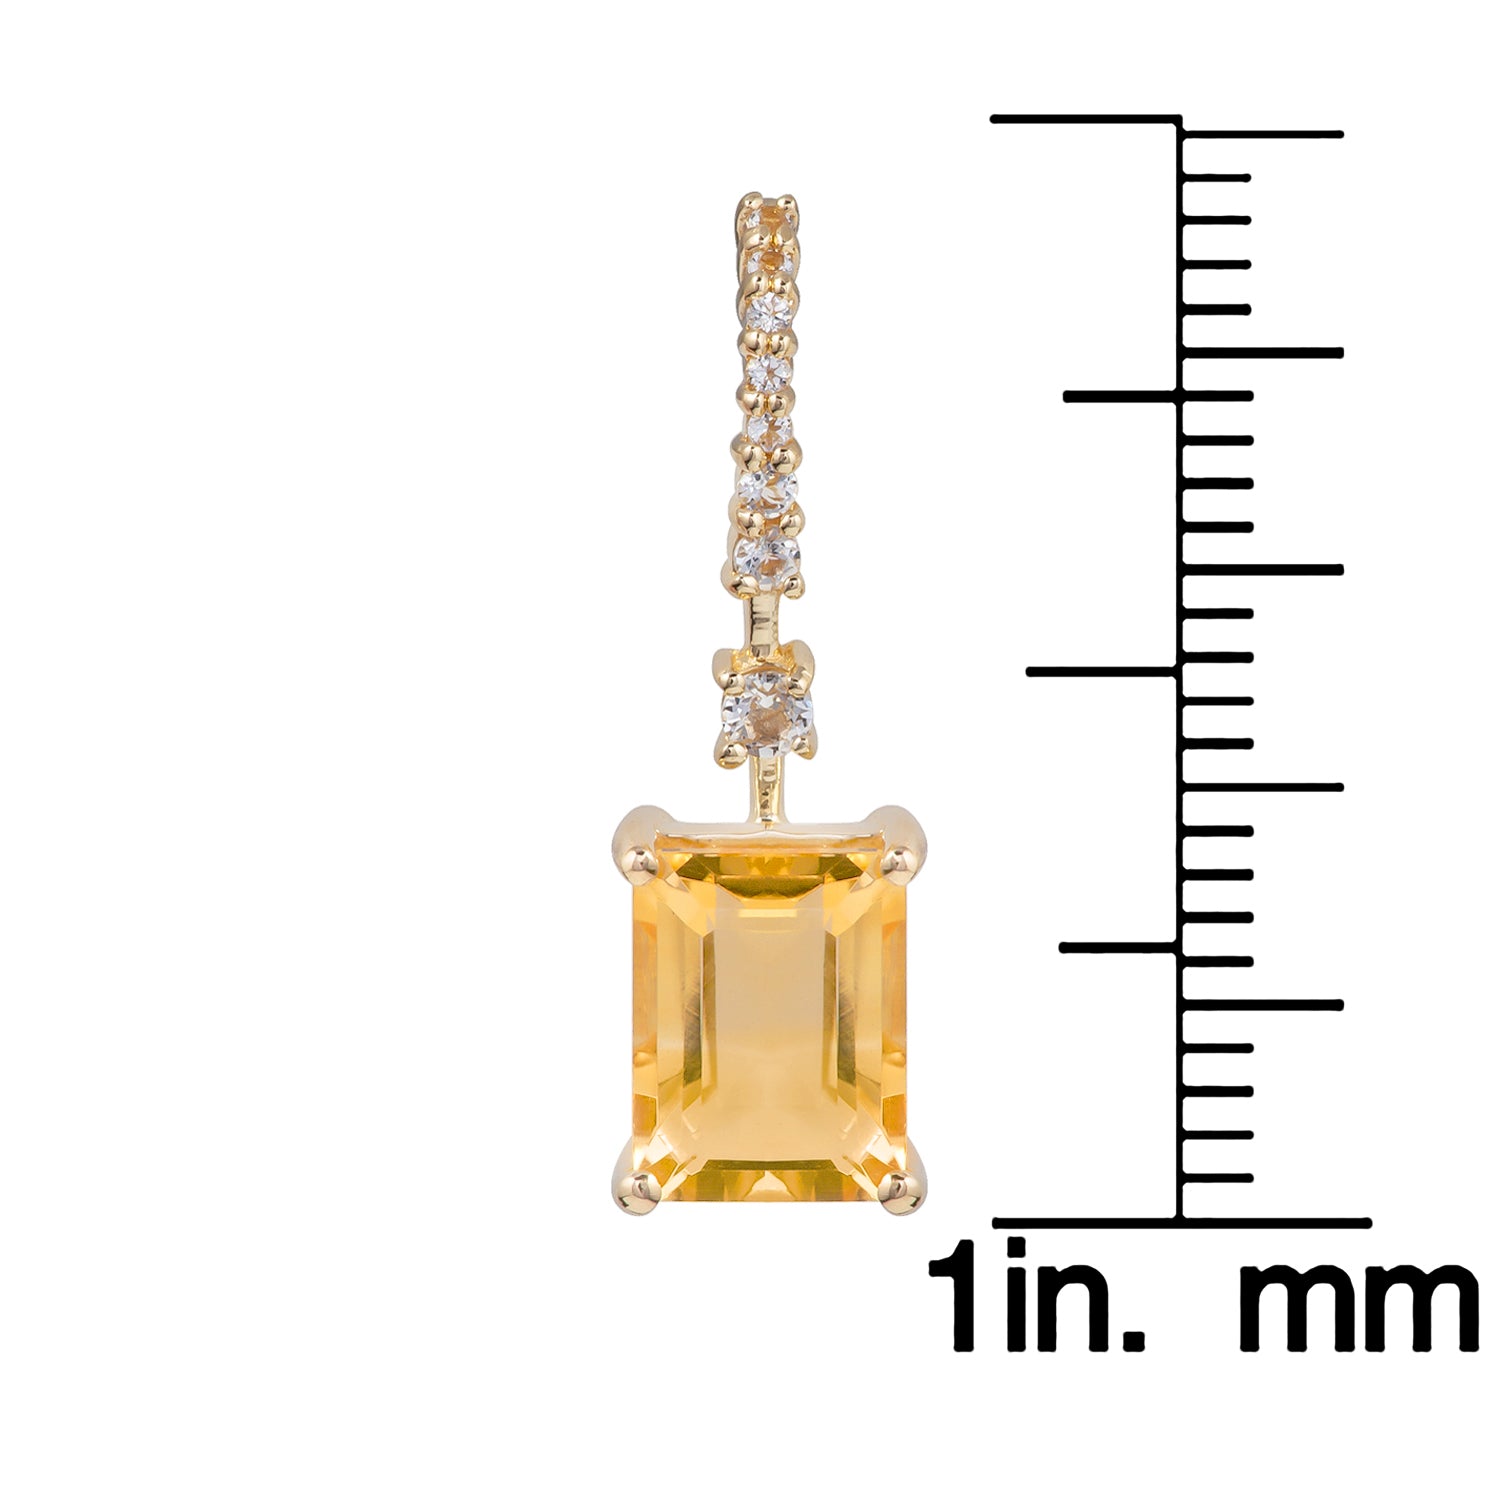 10k Yellow Gold Emerald-Cut Citrine and White Topaz Dangle Earrings